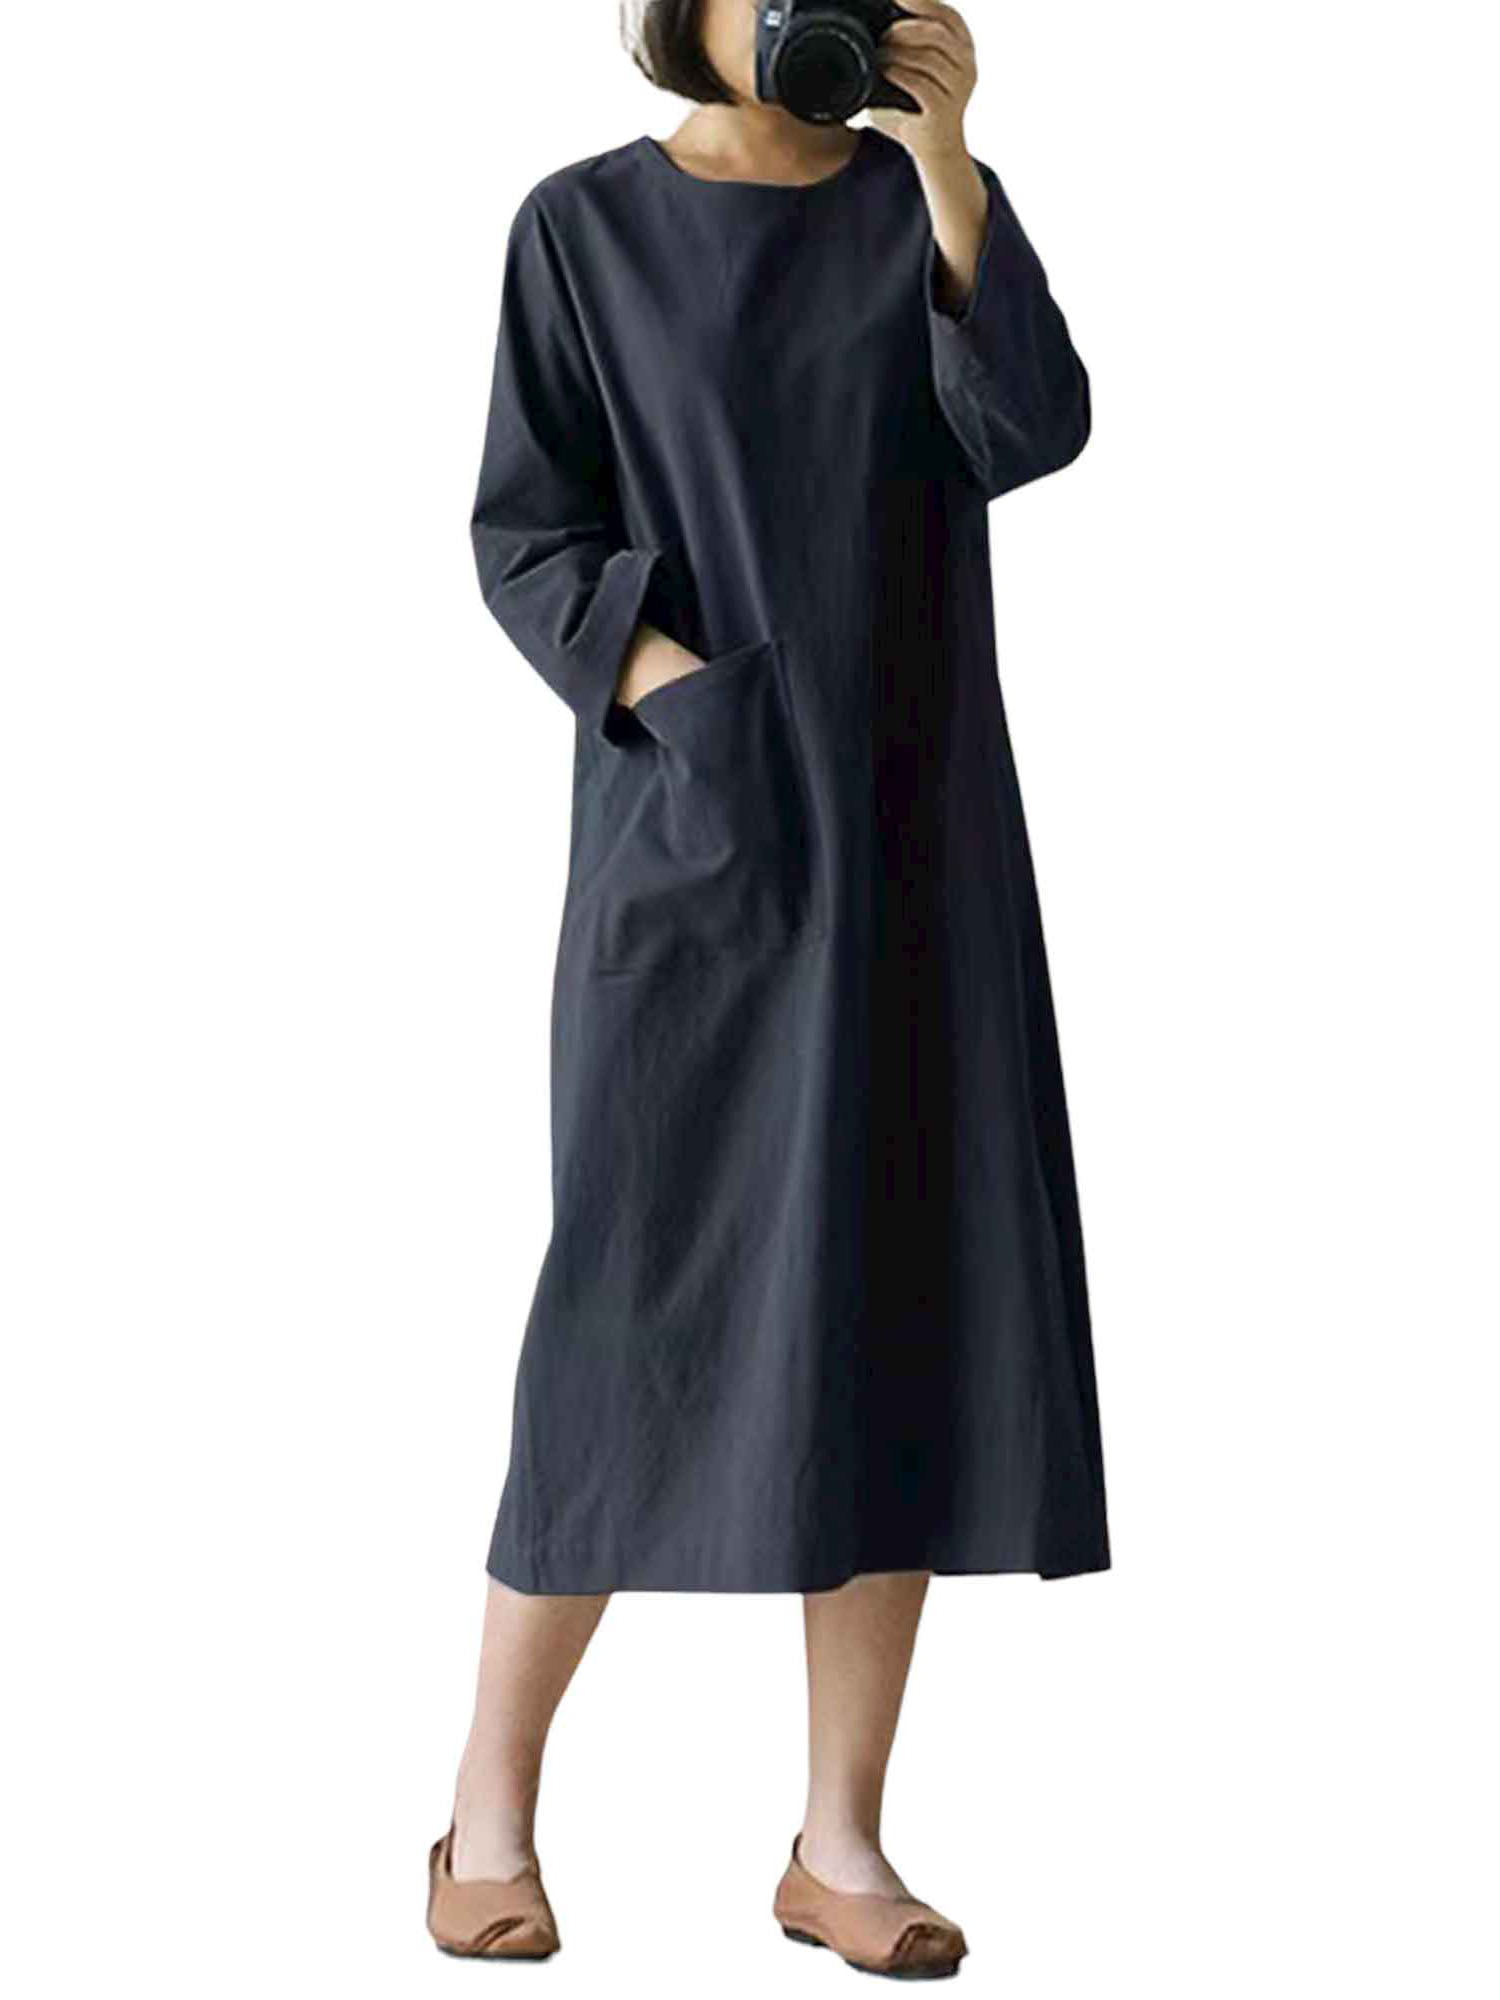 SpringTTC Women Elegant Pockets Solid Color Short Sleeve Cotton Linen ...